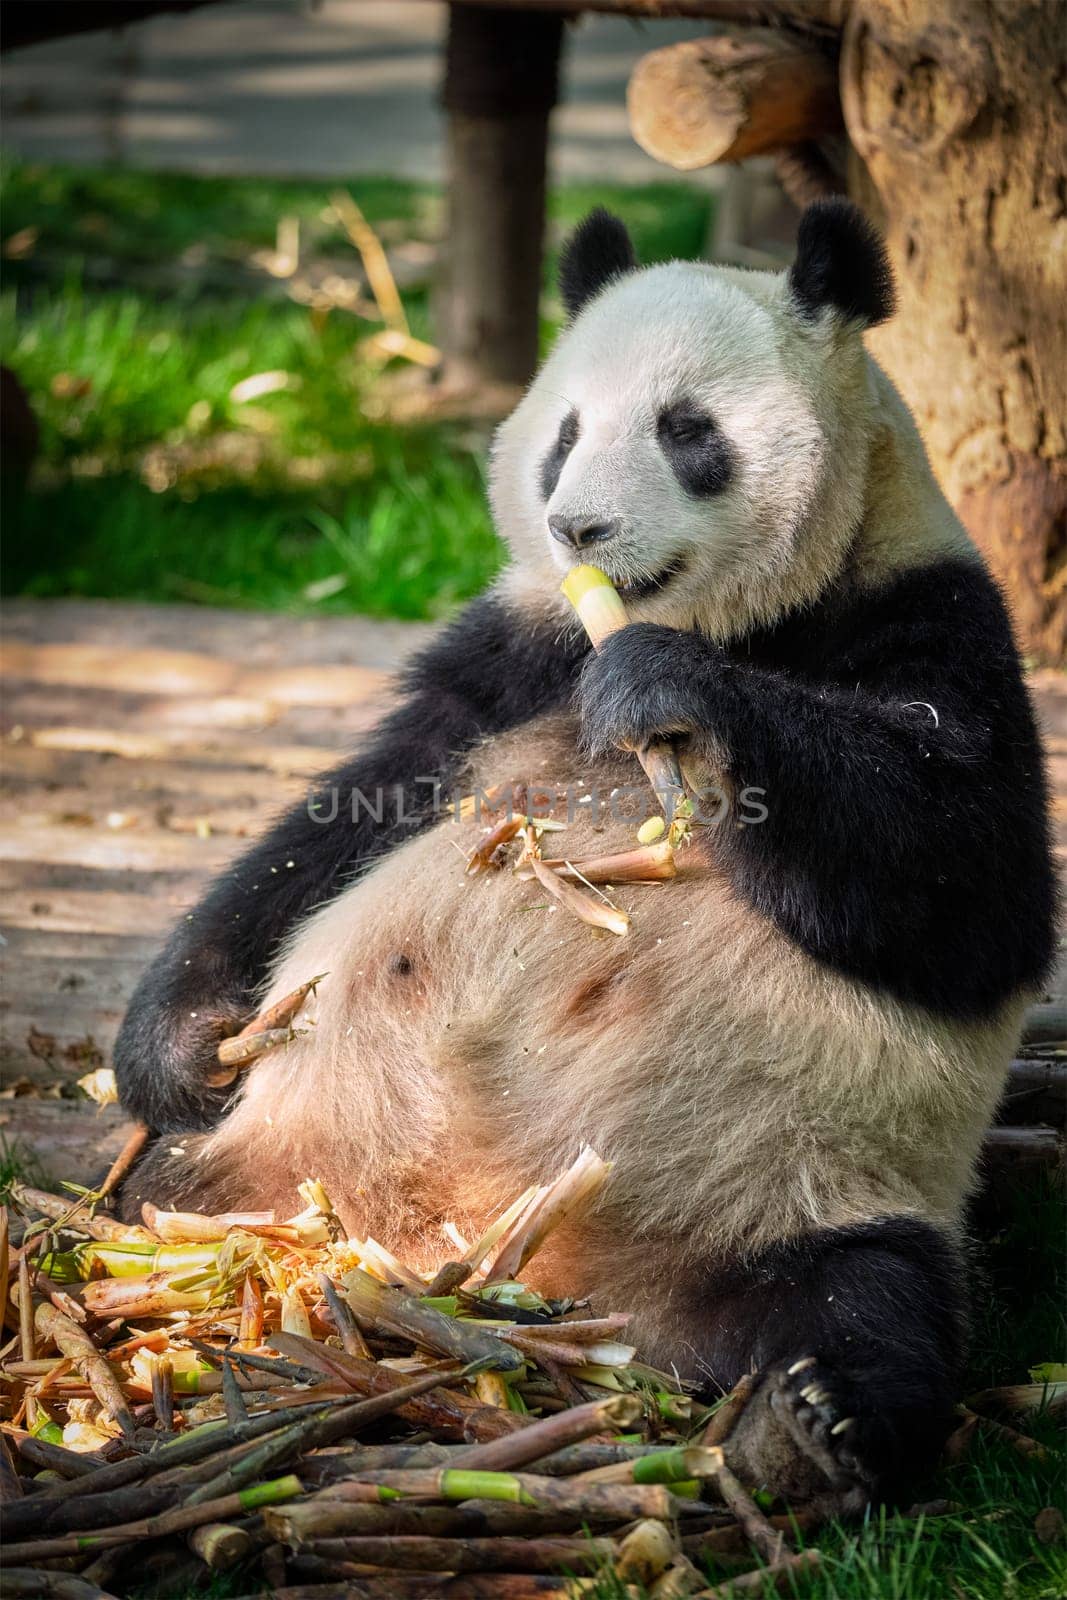 Giant panda bear in China by dimol